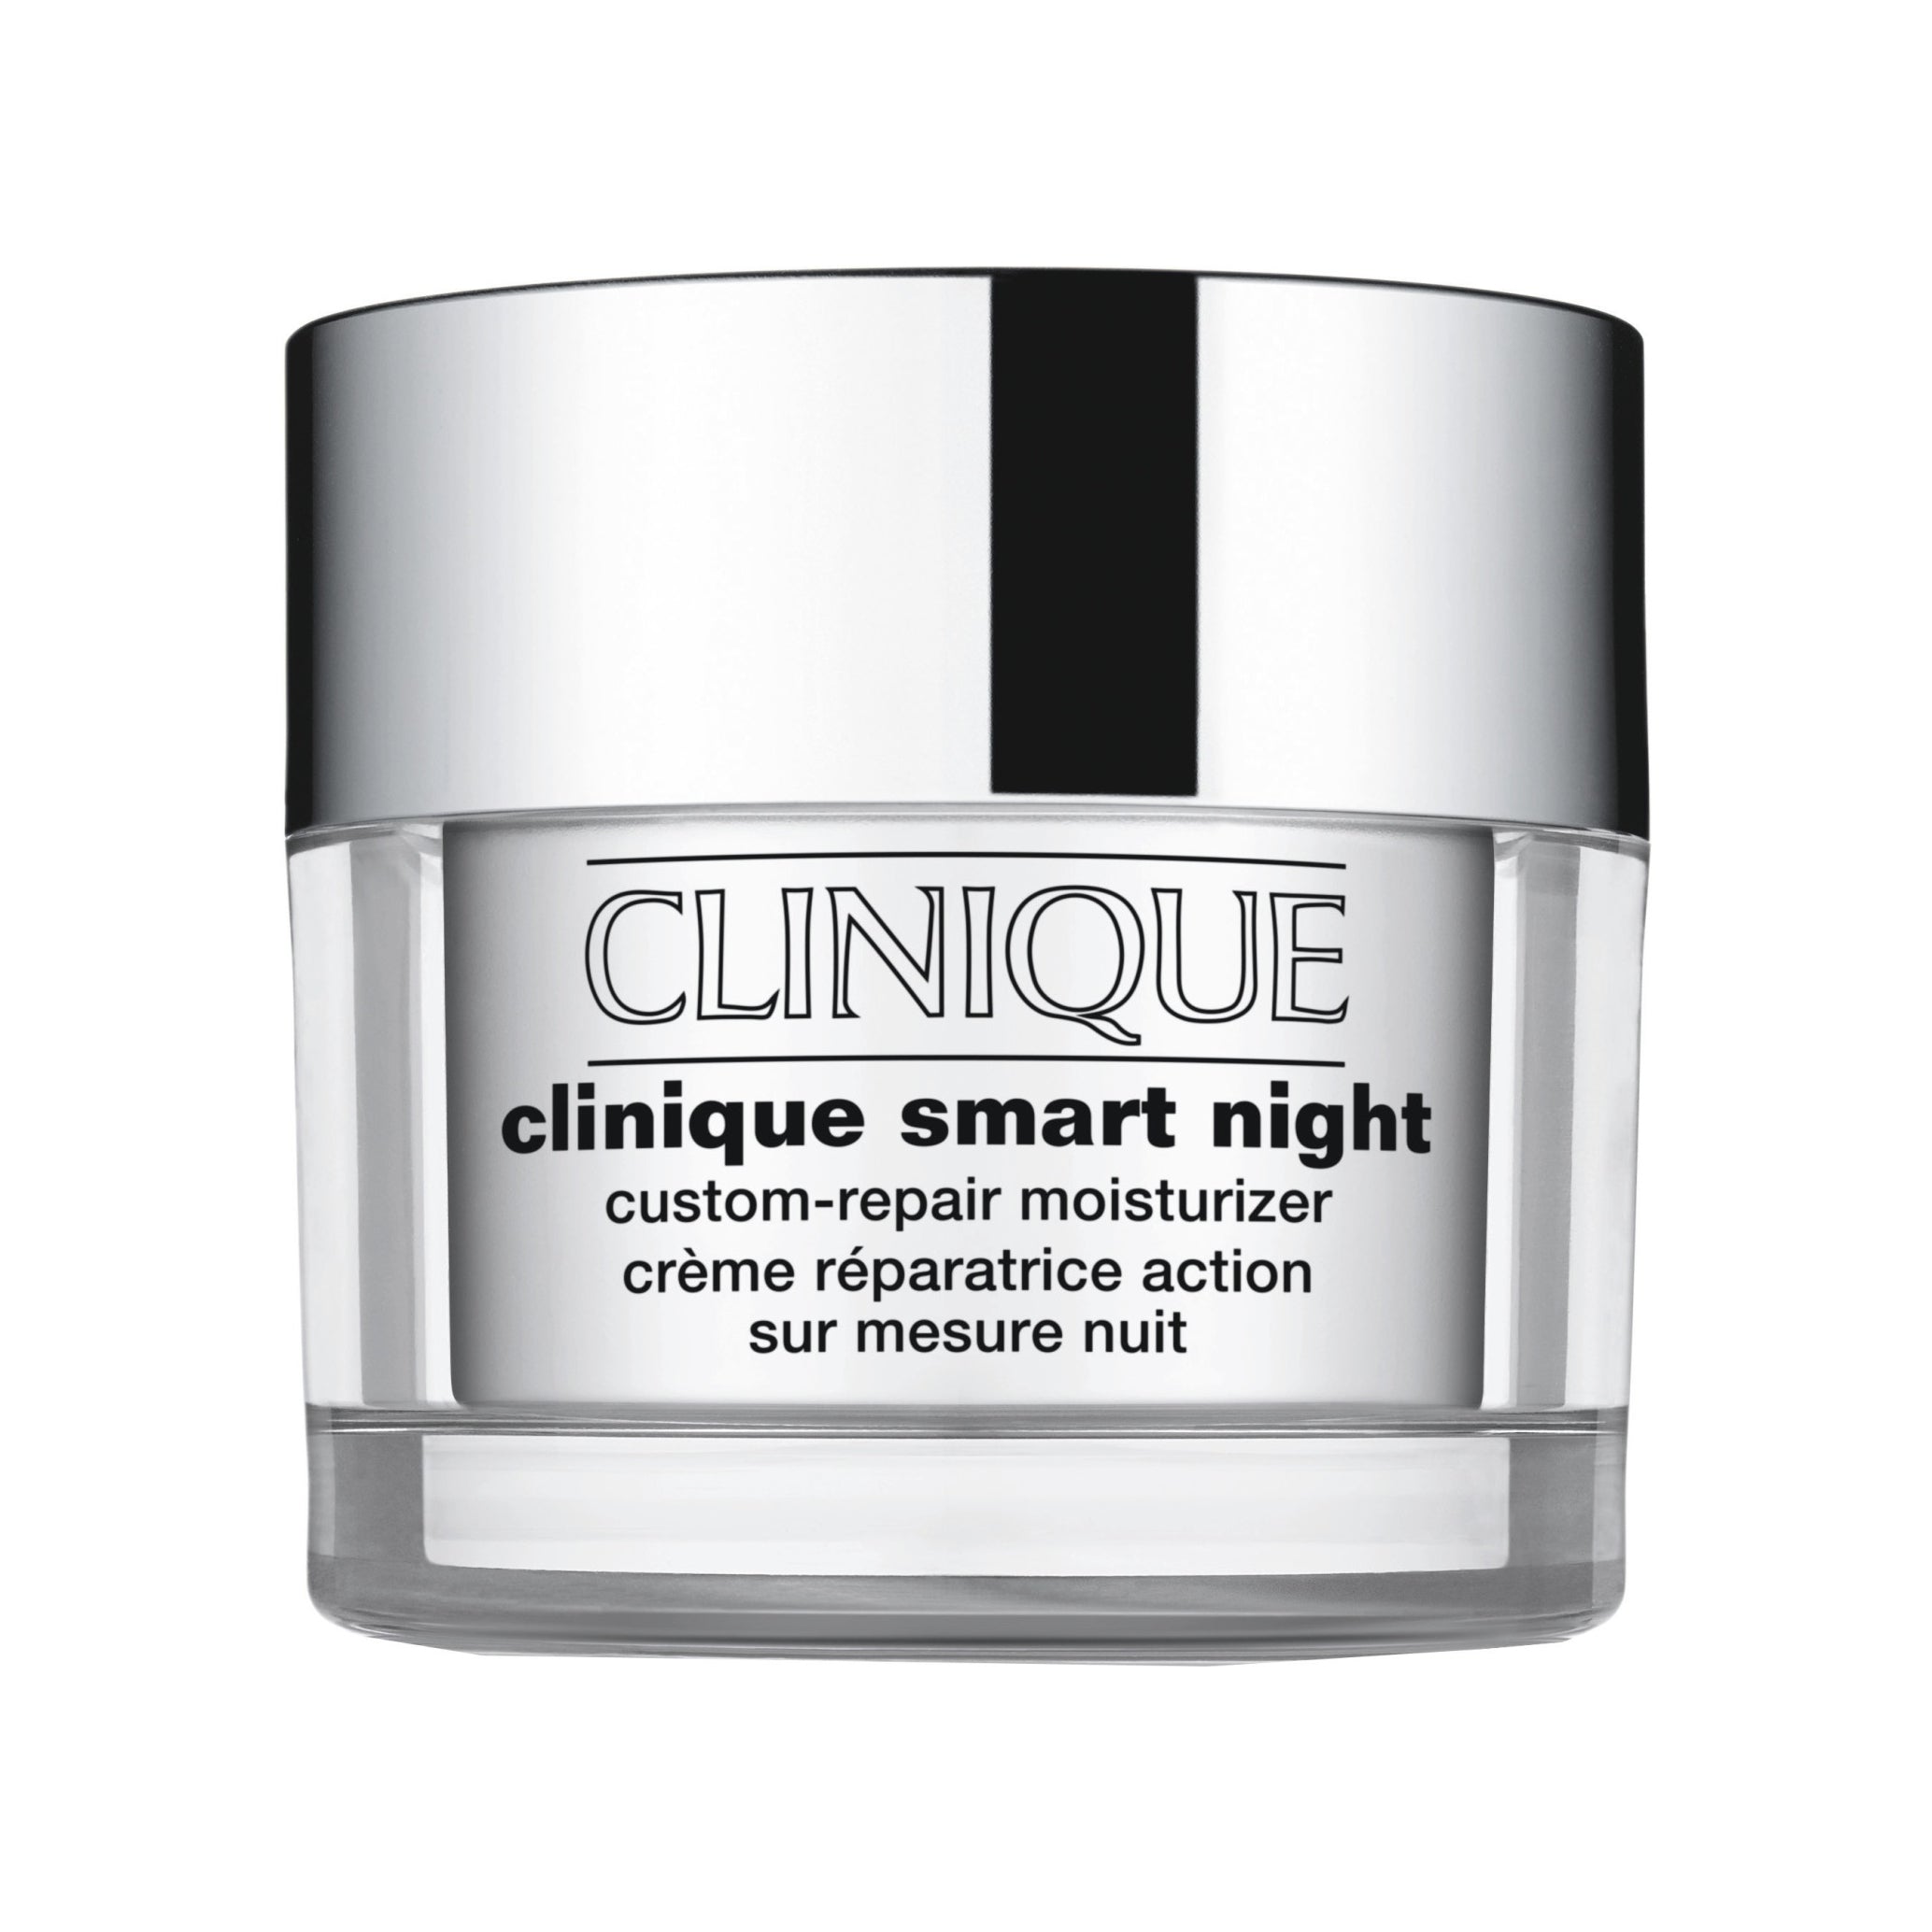 SMART NIGHT custom-repair moisturizer II Gesichtspflege CLINIQUE   